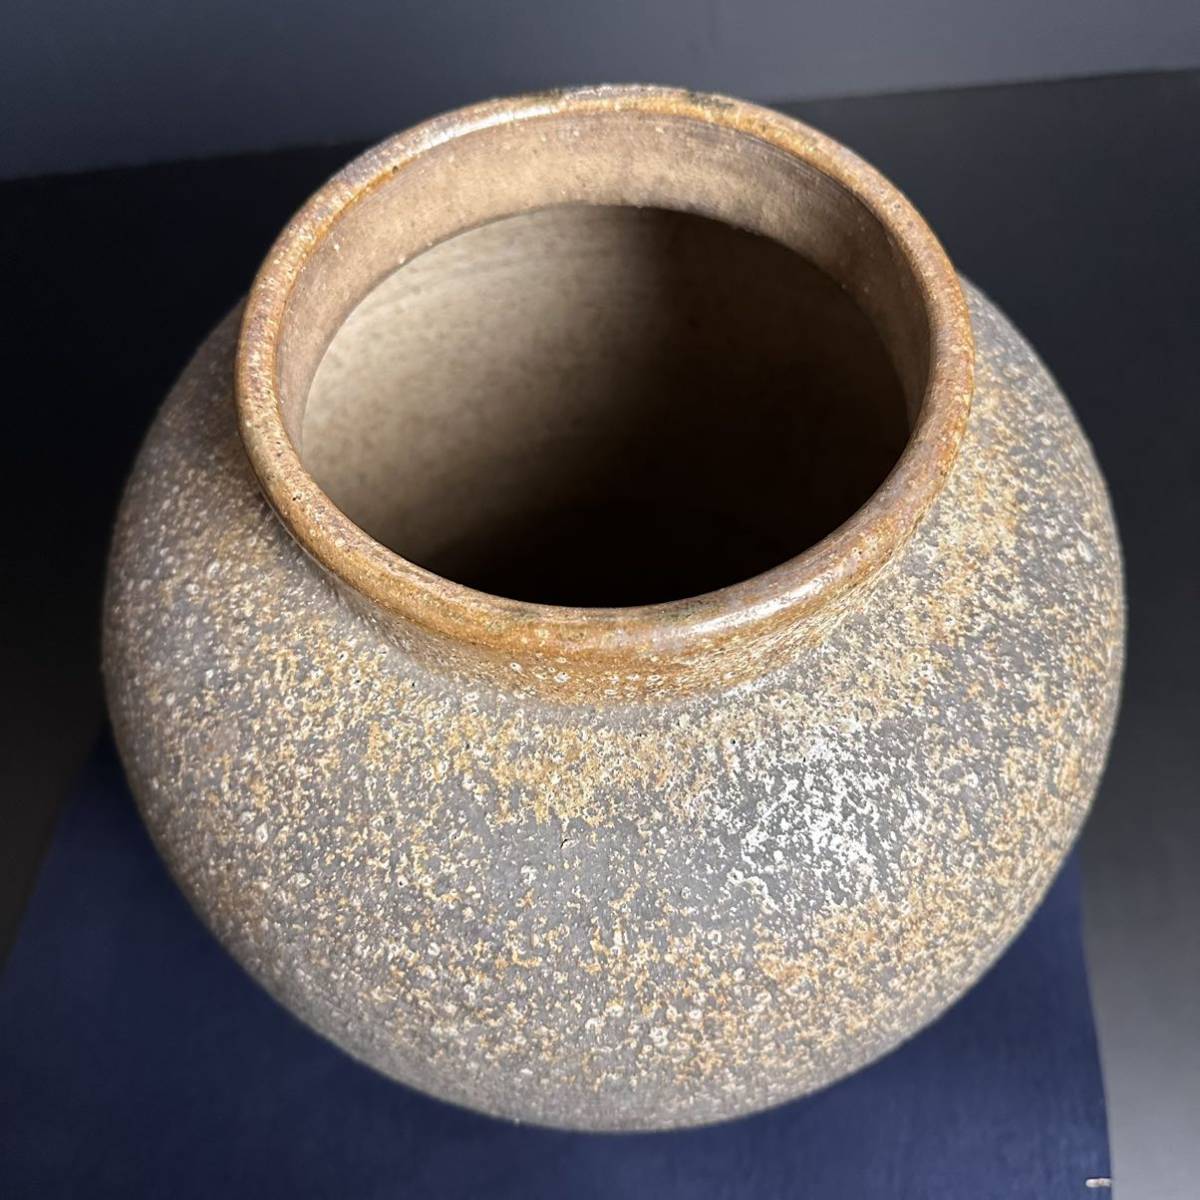 [KJ283] старый Shigaraki .. чай . ваза орнамент кувшин "hu" круг кувшин высота примерно 34cm ваза для цветов цветок сырой . инструмент пол между чайная посуда Shigaraki Iga .